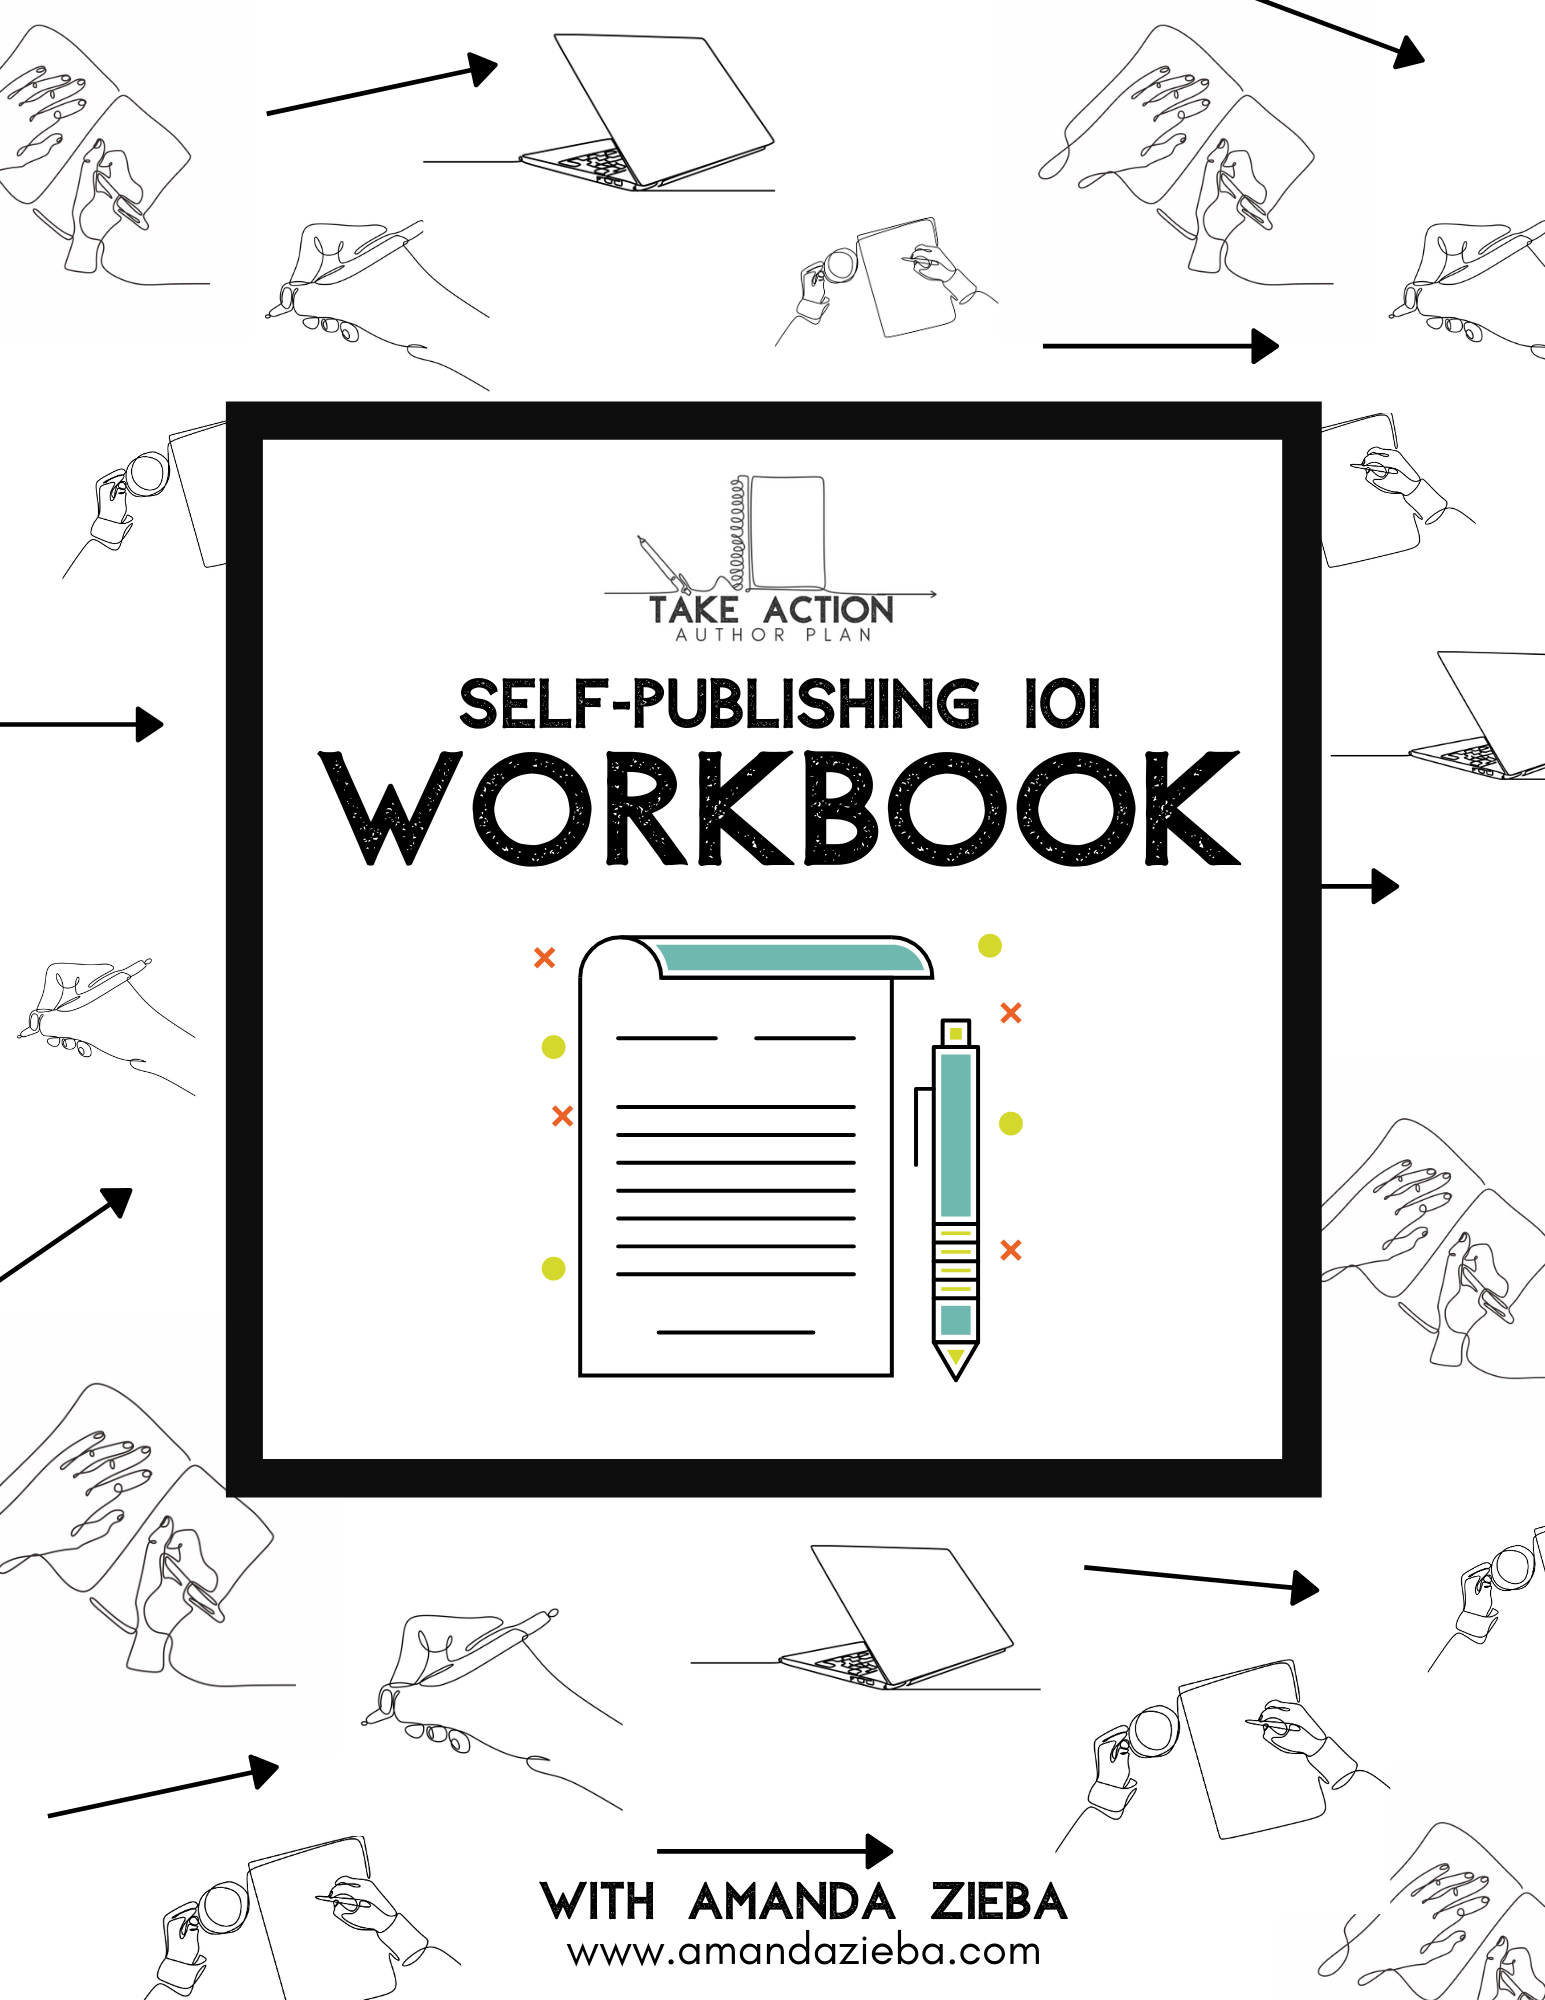 Take Action Author Plan_ Self-Pub 101 Workbook.png